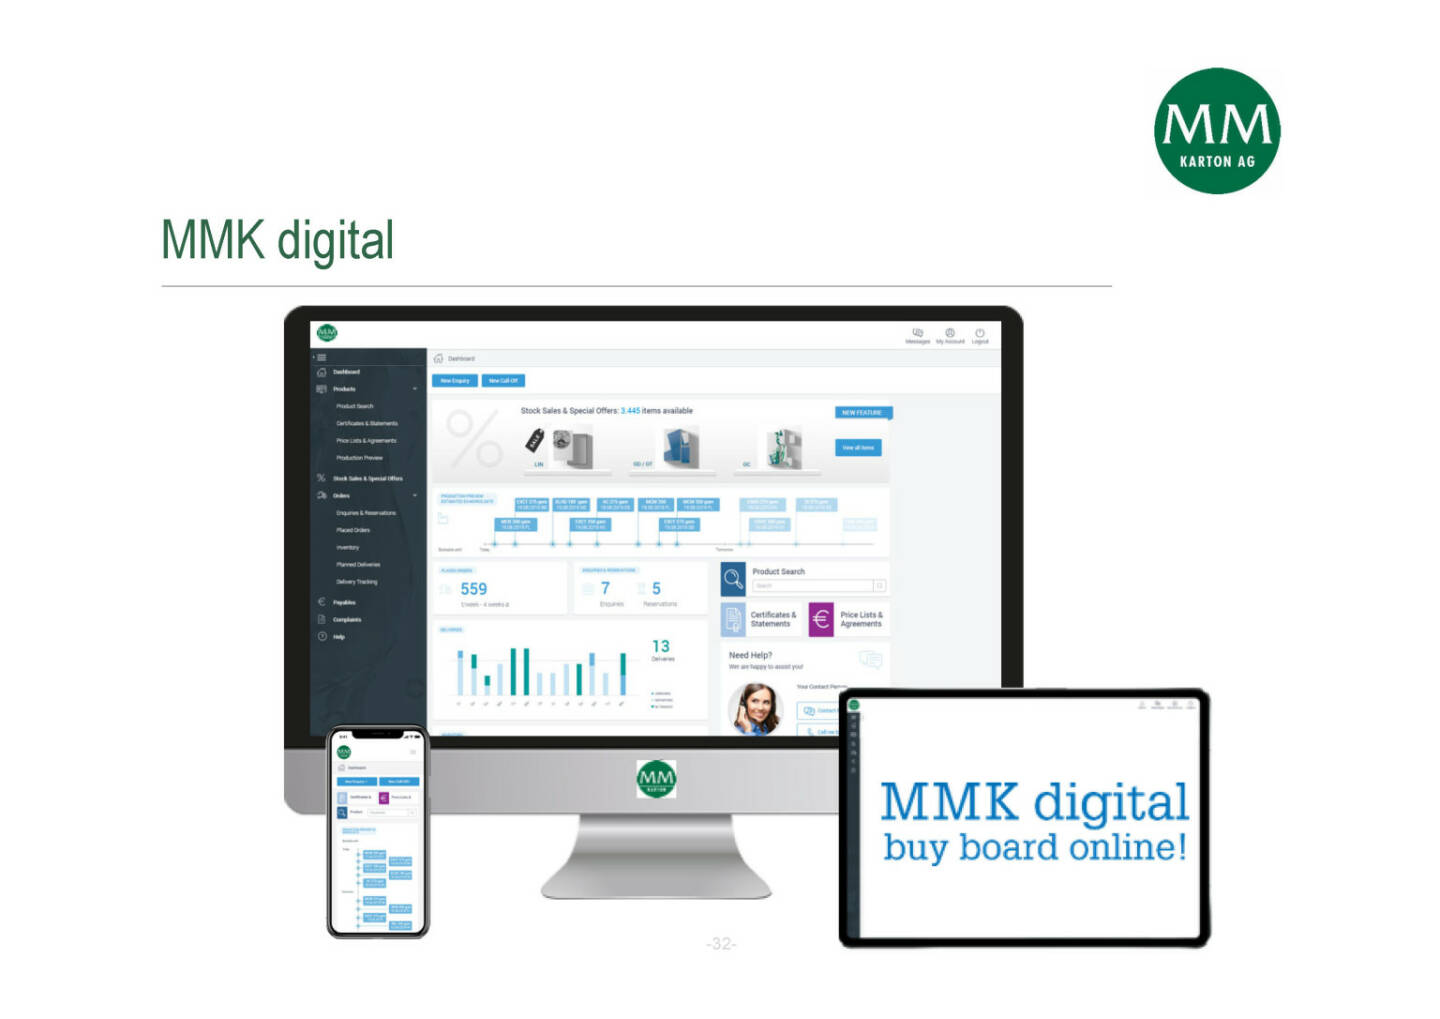 Mayr-Melnhof - MMK digital